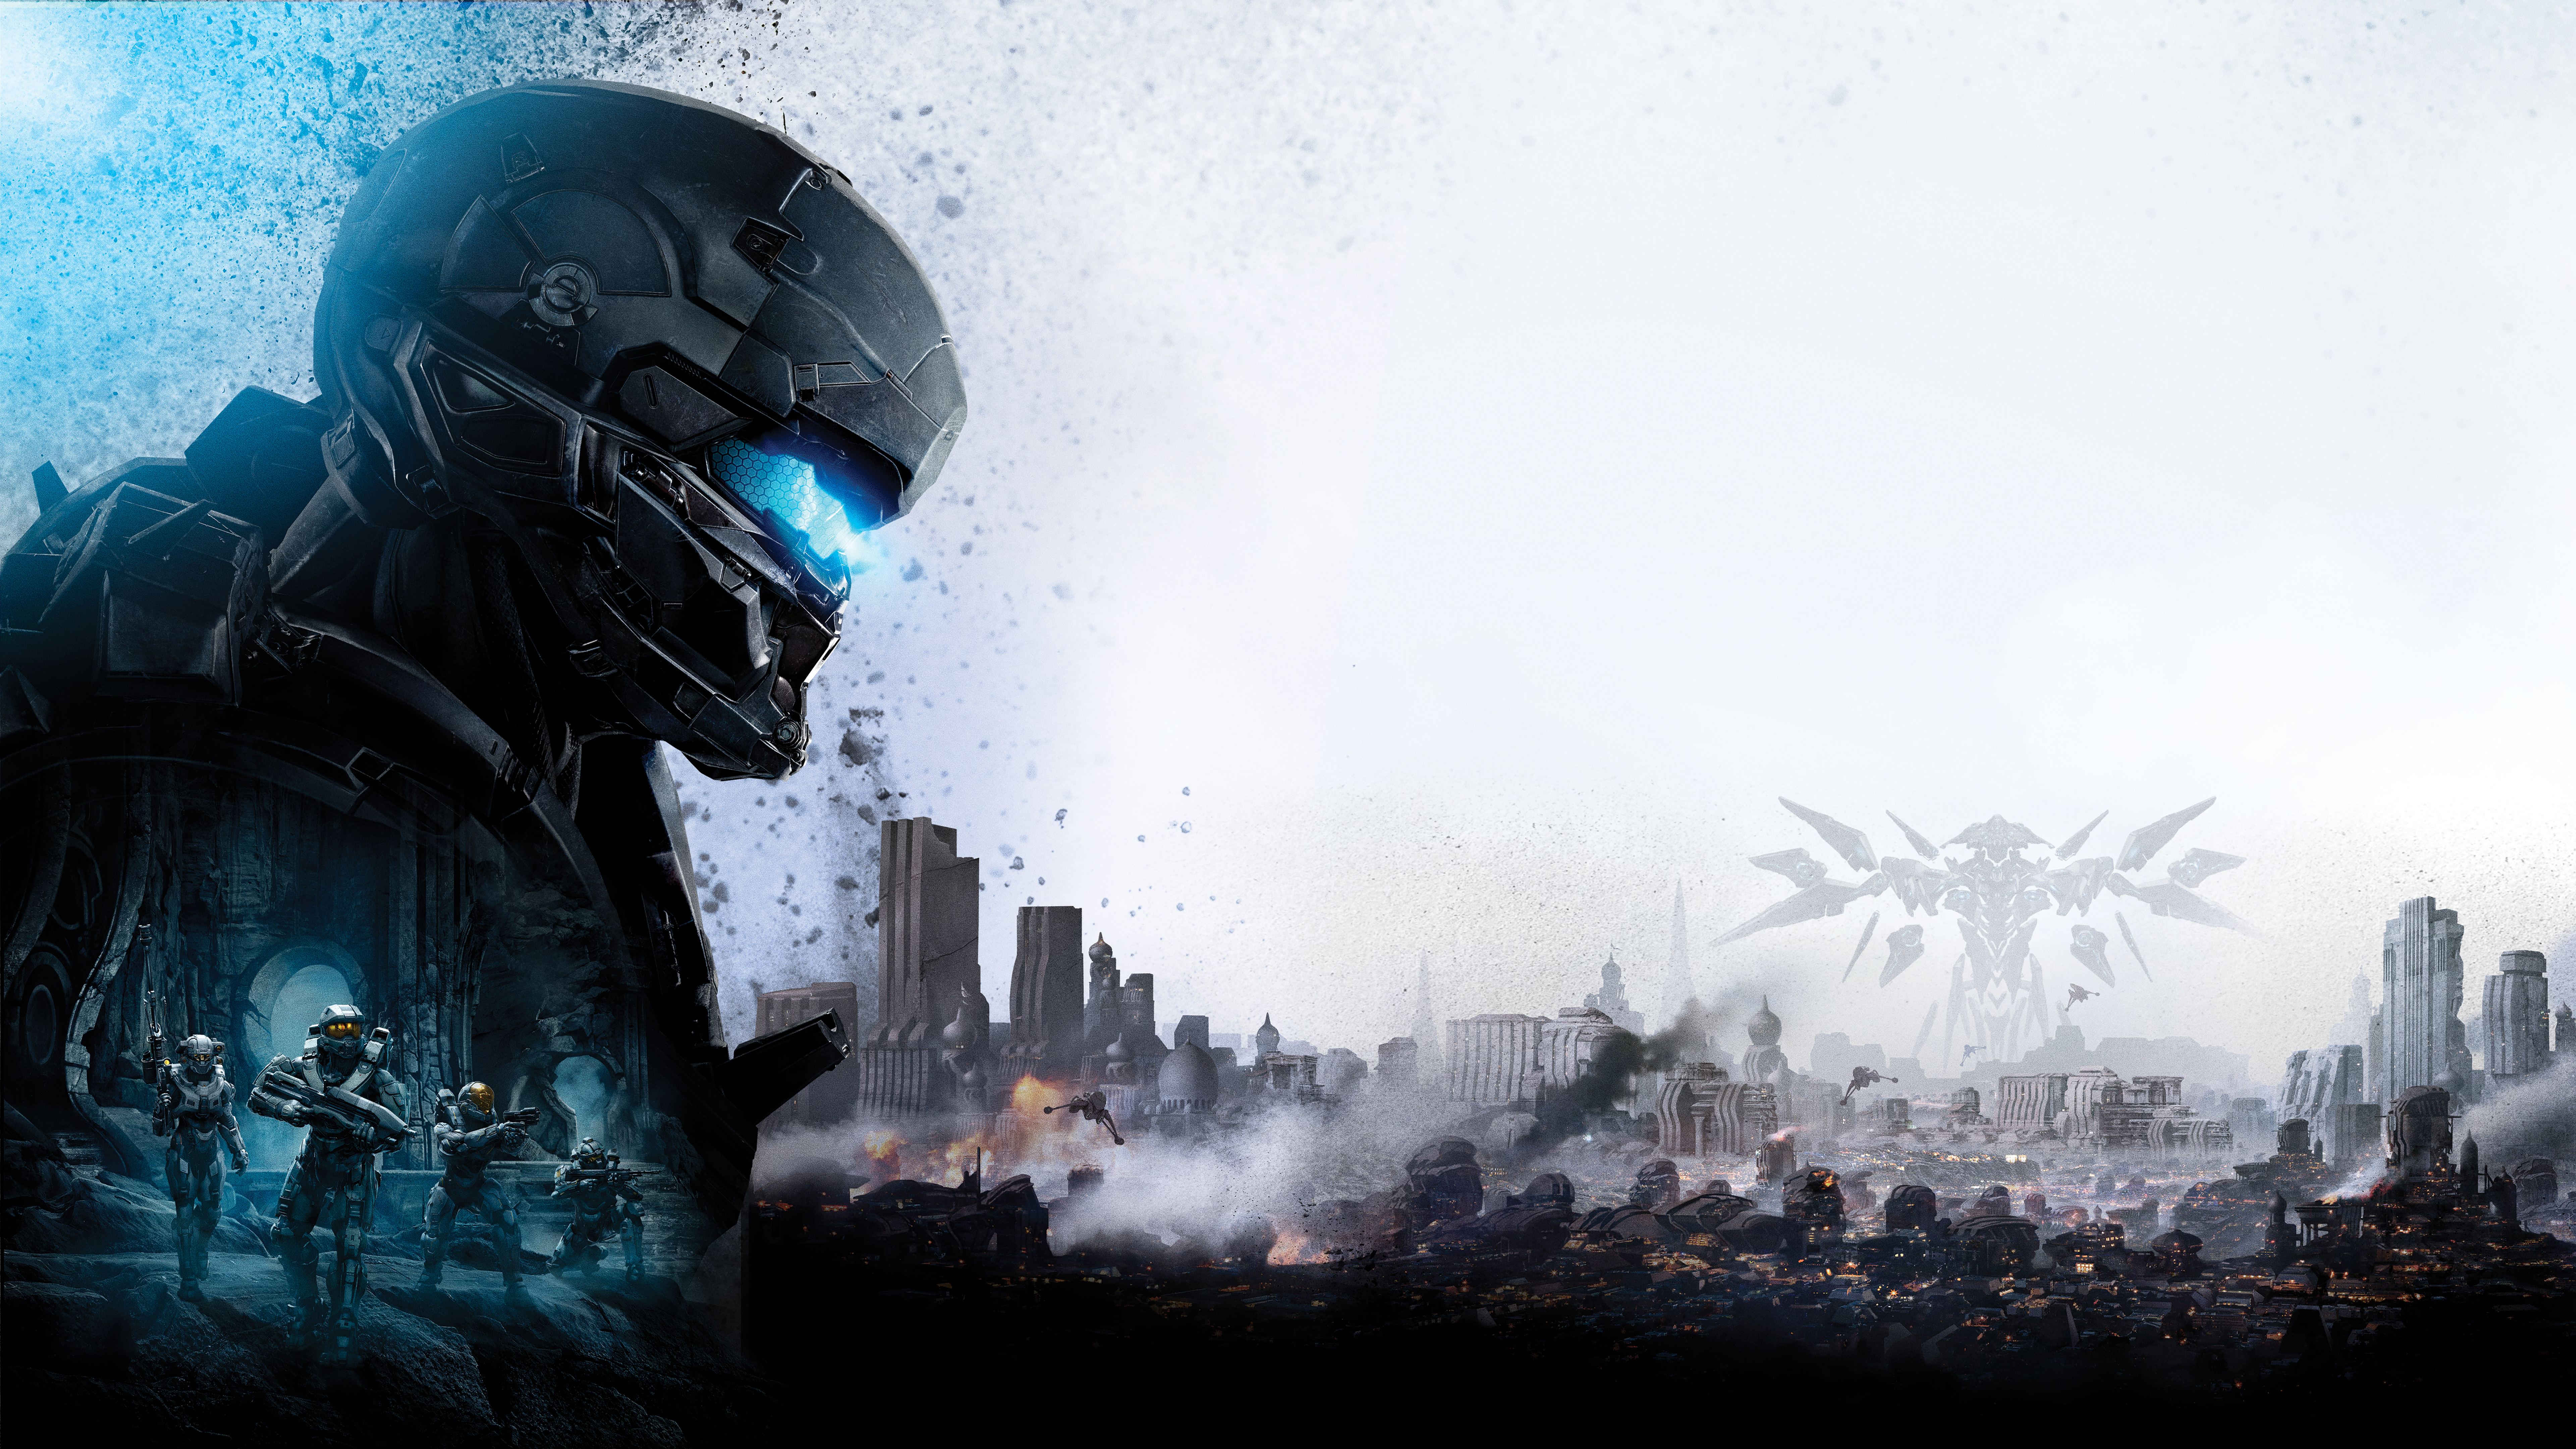 Locke Halo 5 Guardians 8k, HD Games, 4k Wallpapers, Images ...